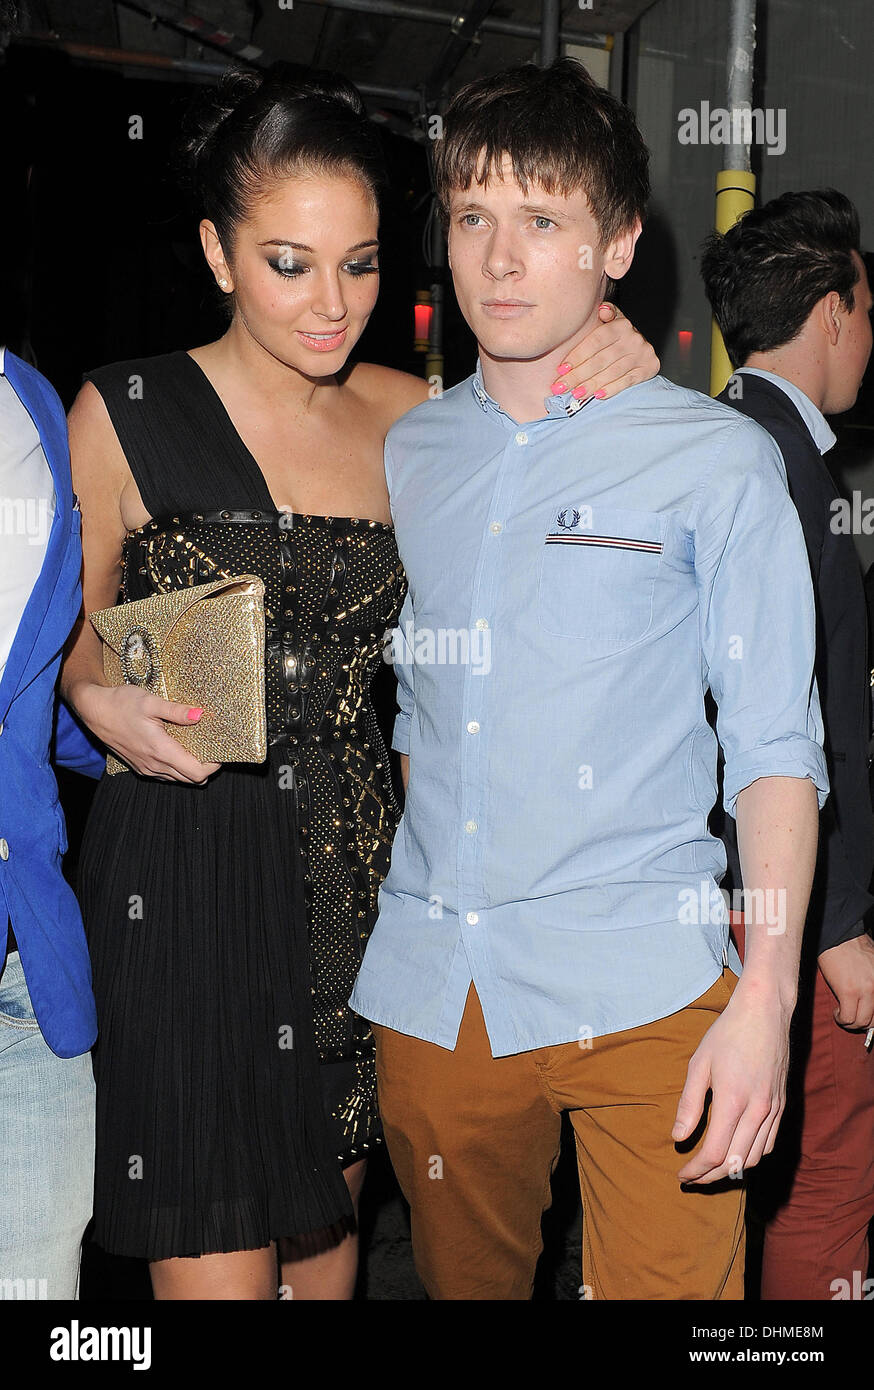 Tulisa Contostavlos and her boyfriend Jack O'Connell arriving at Mahiki nightclub.  London, England - 02.05.12 Stock Photo